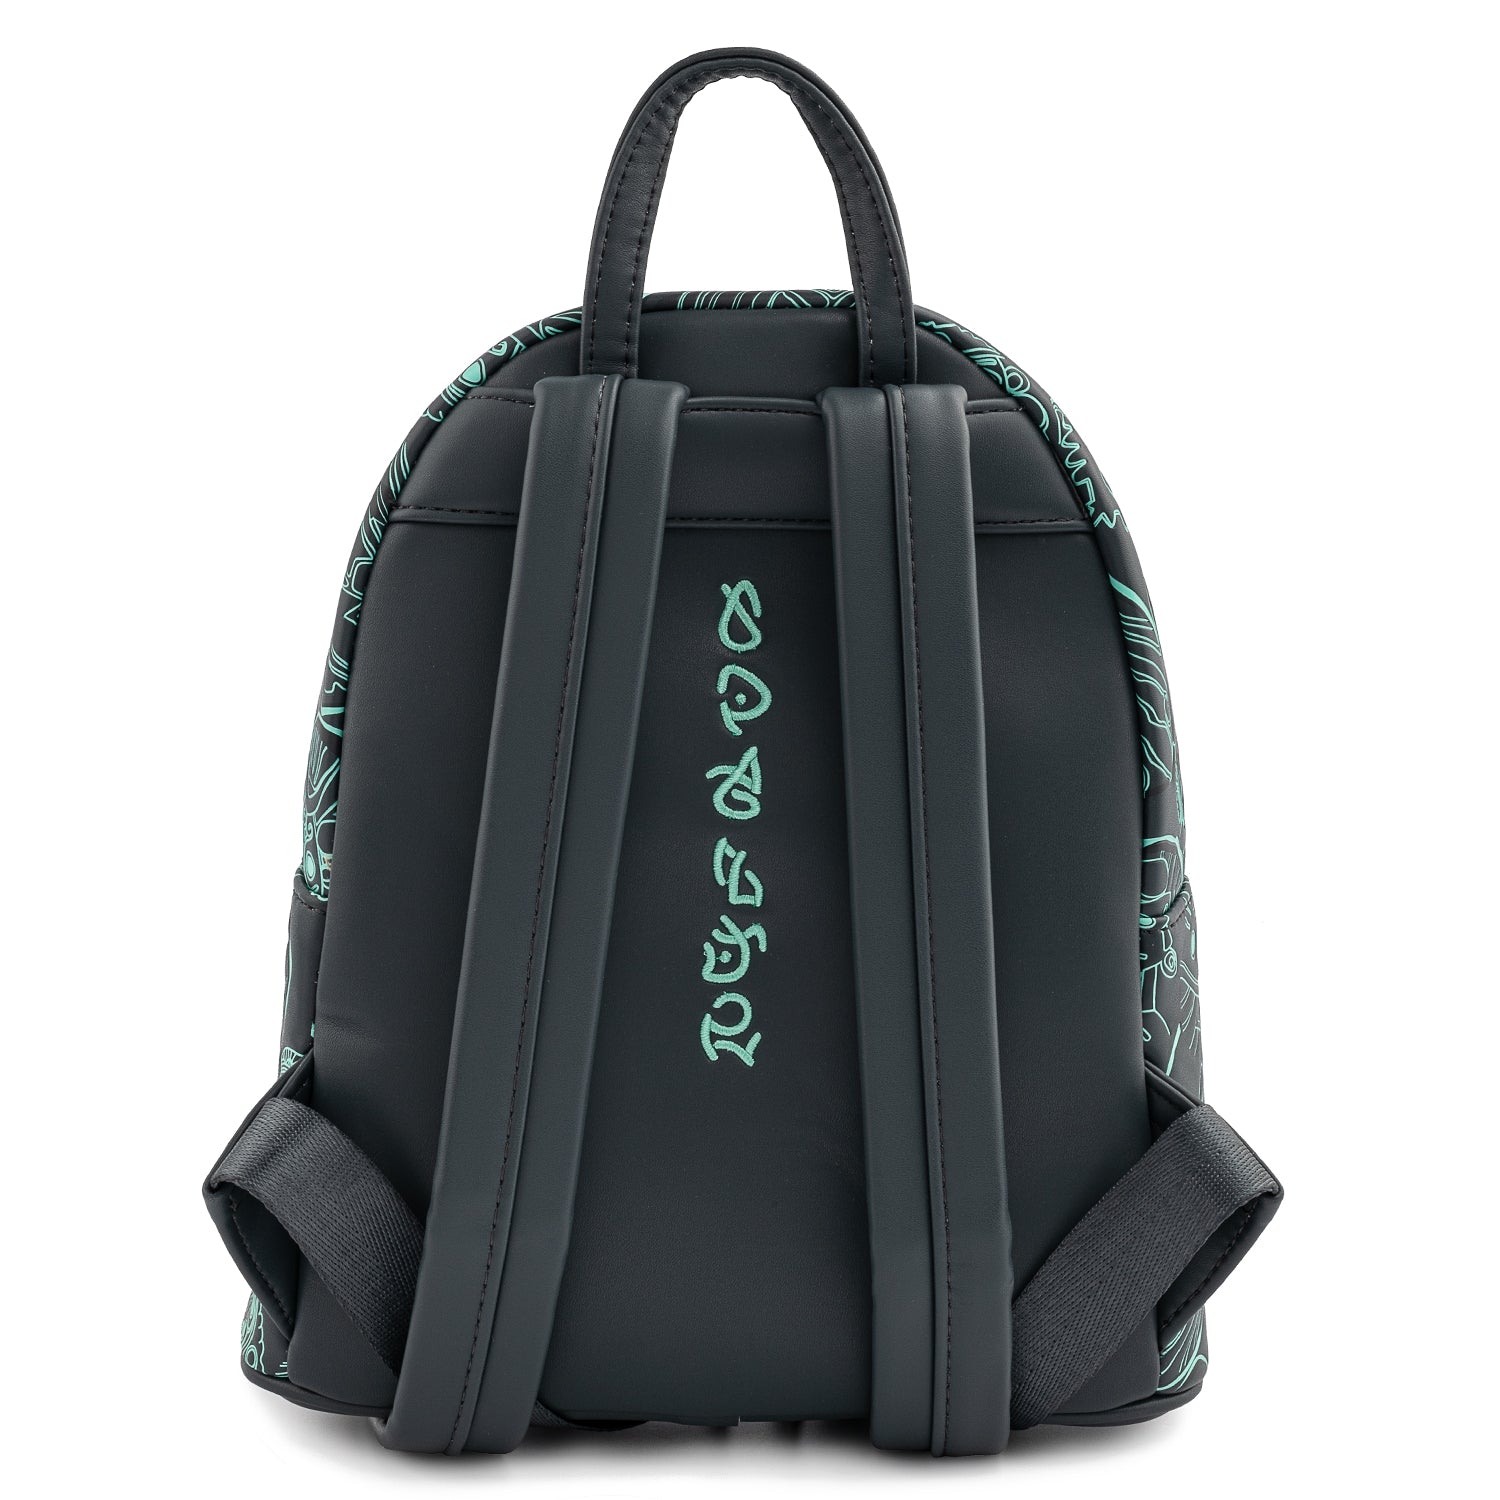 Disney | Atlantis 20th Anniversary Kida Milo Loungefly Mini Backpack